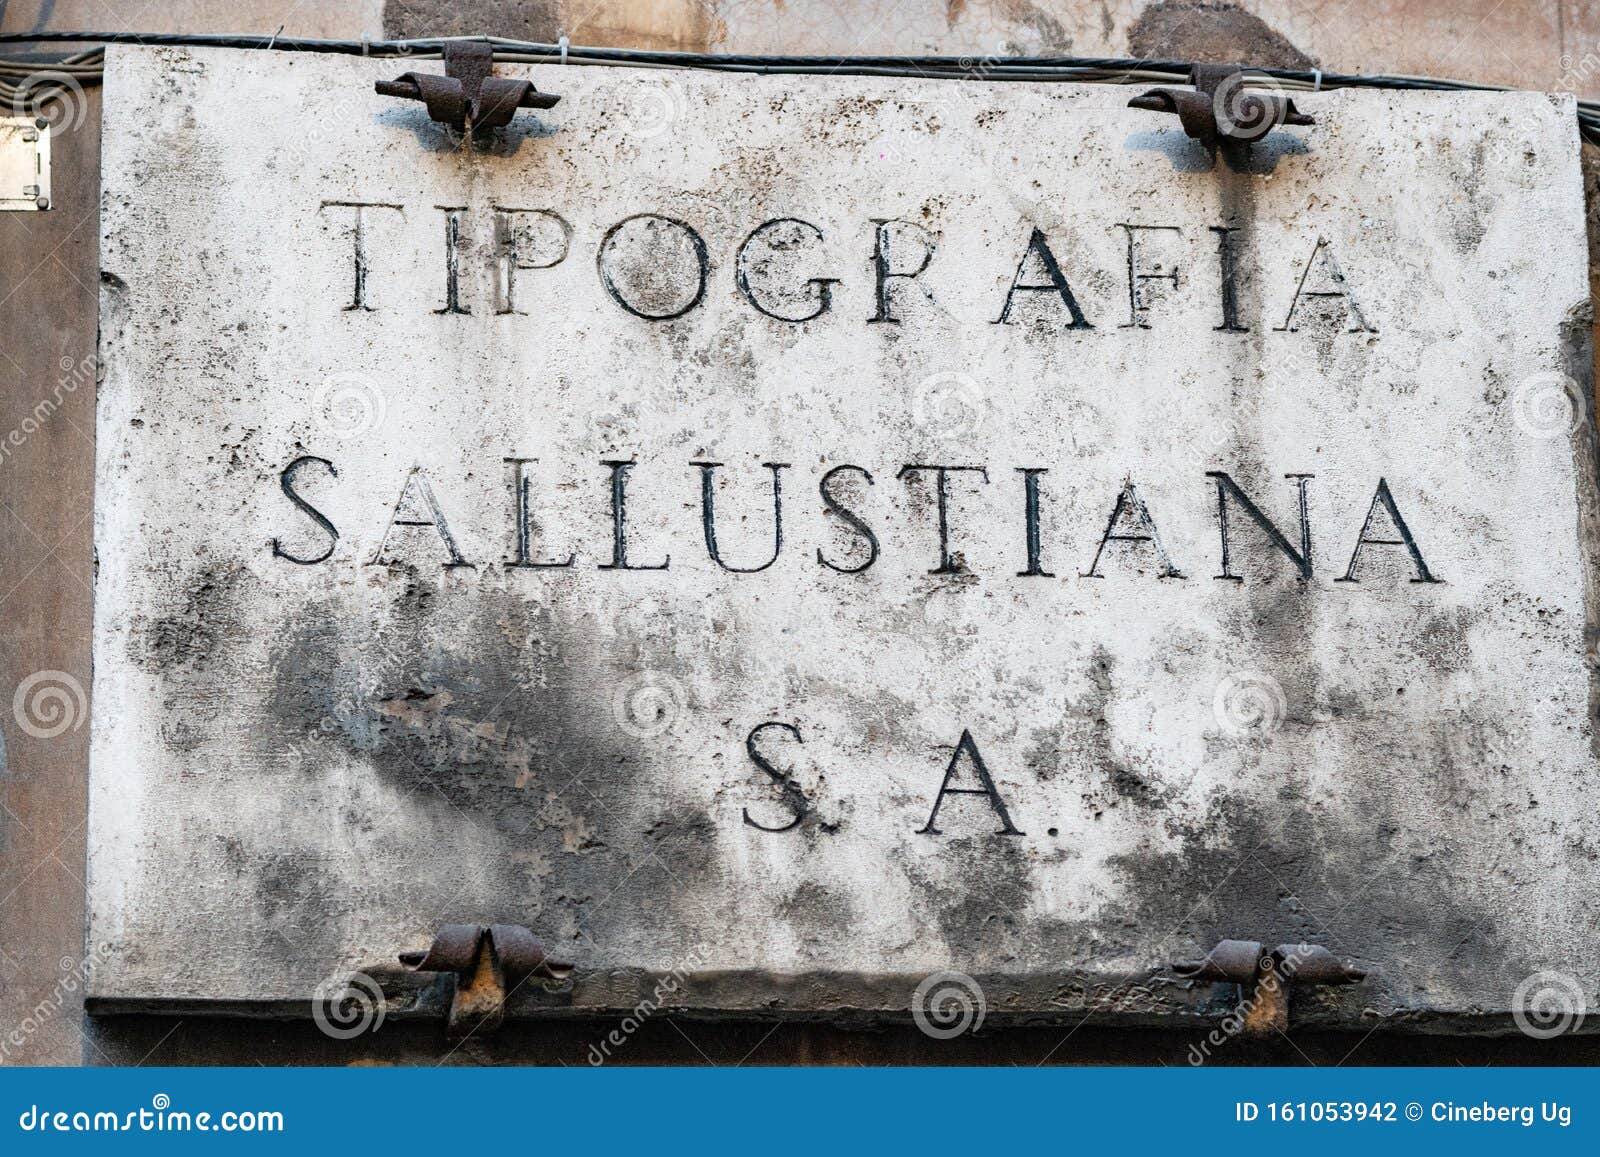 old stone sign of tipografia sallustiana, rome, italy